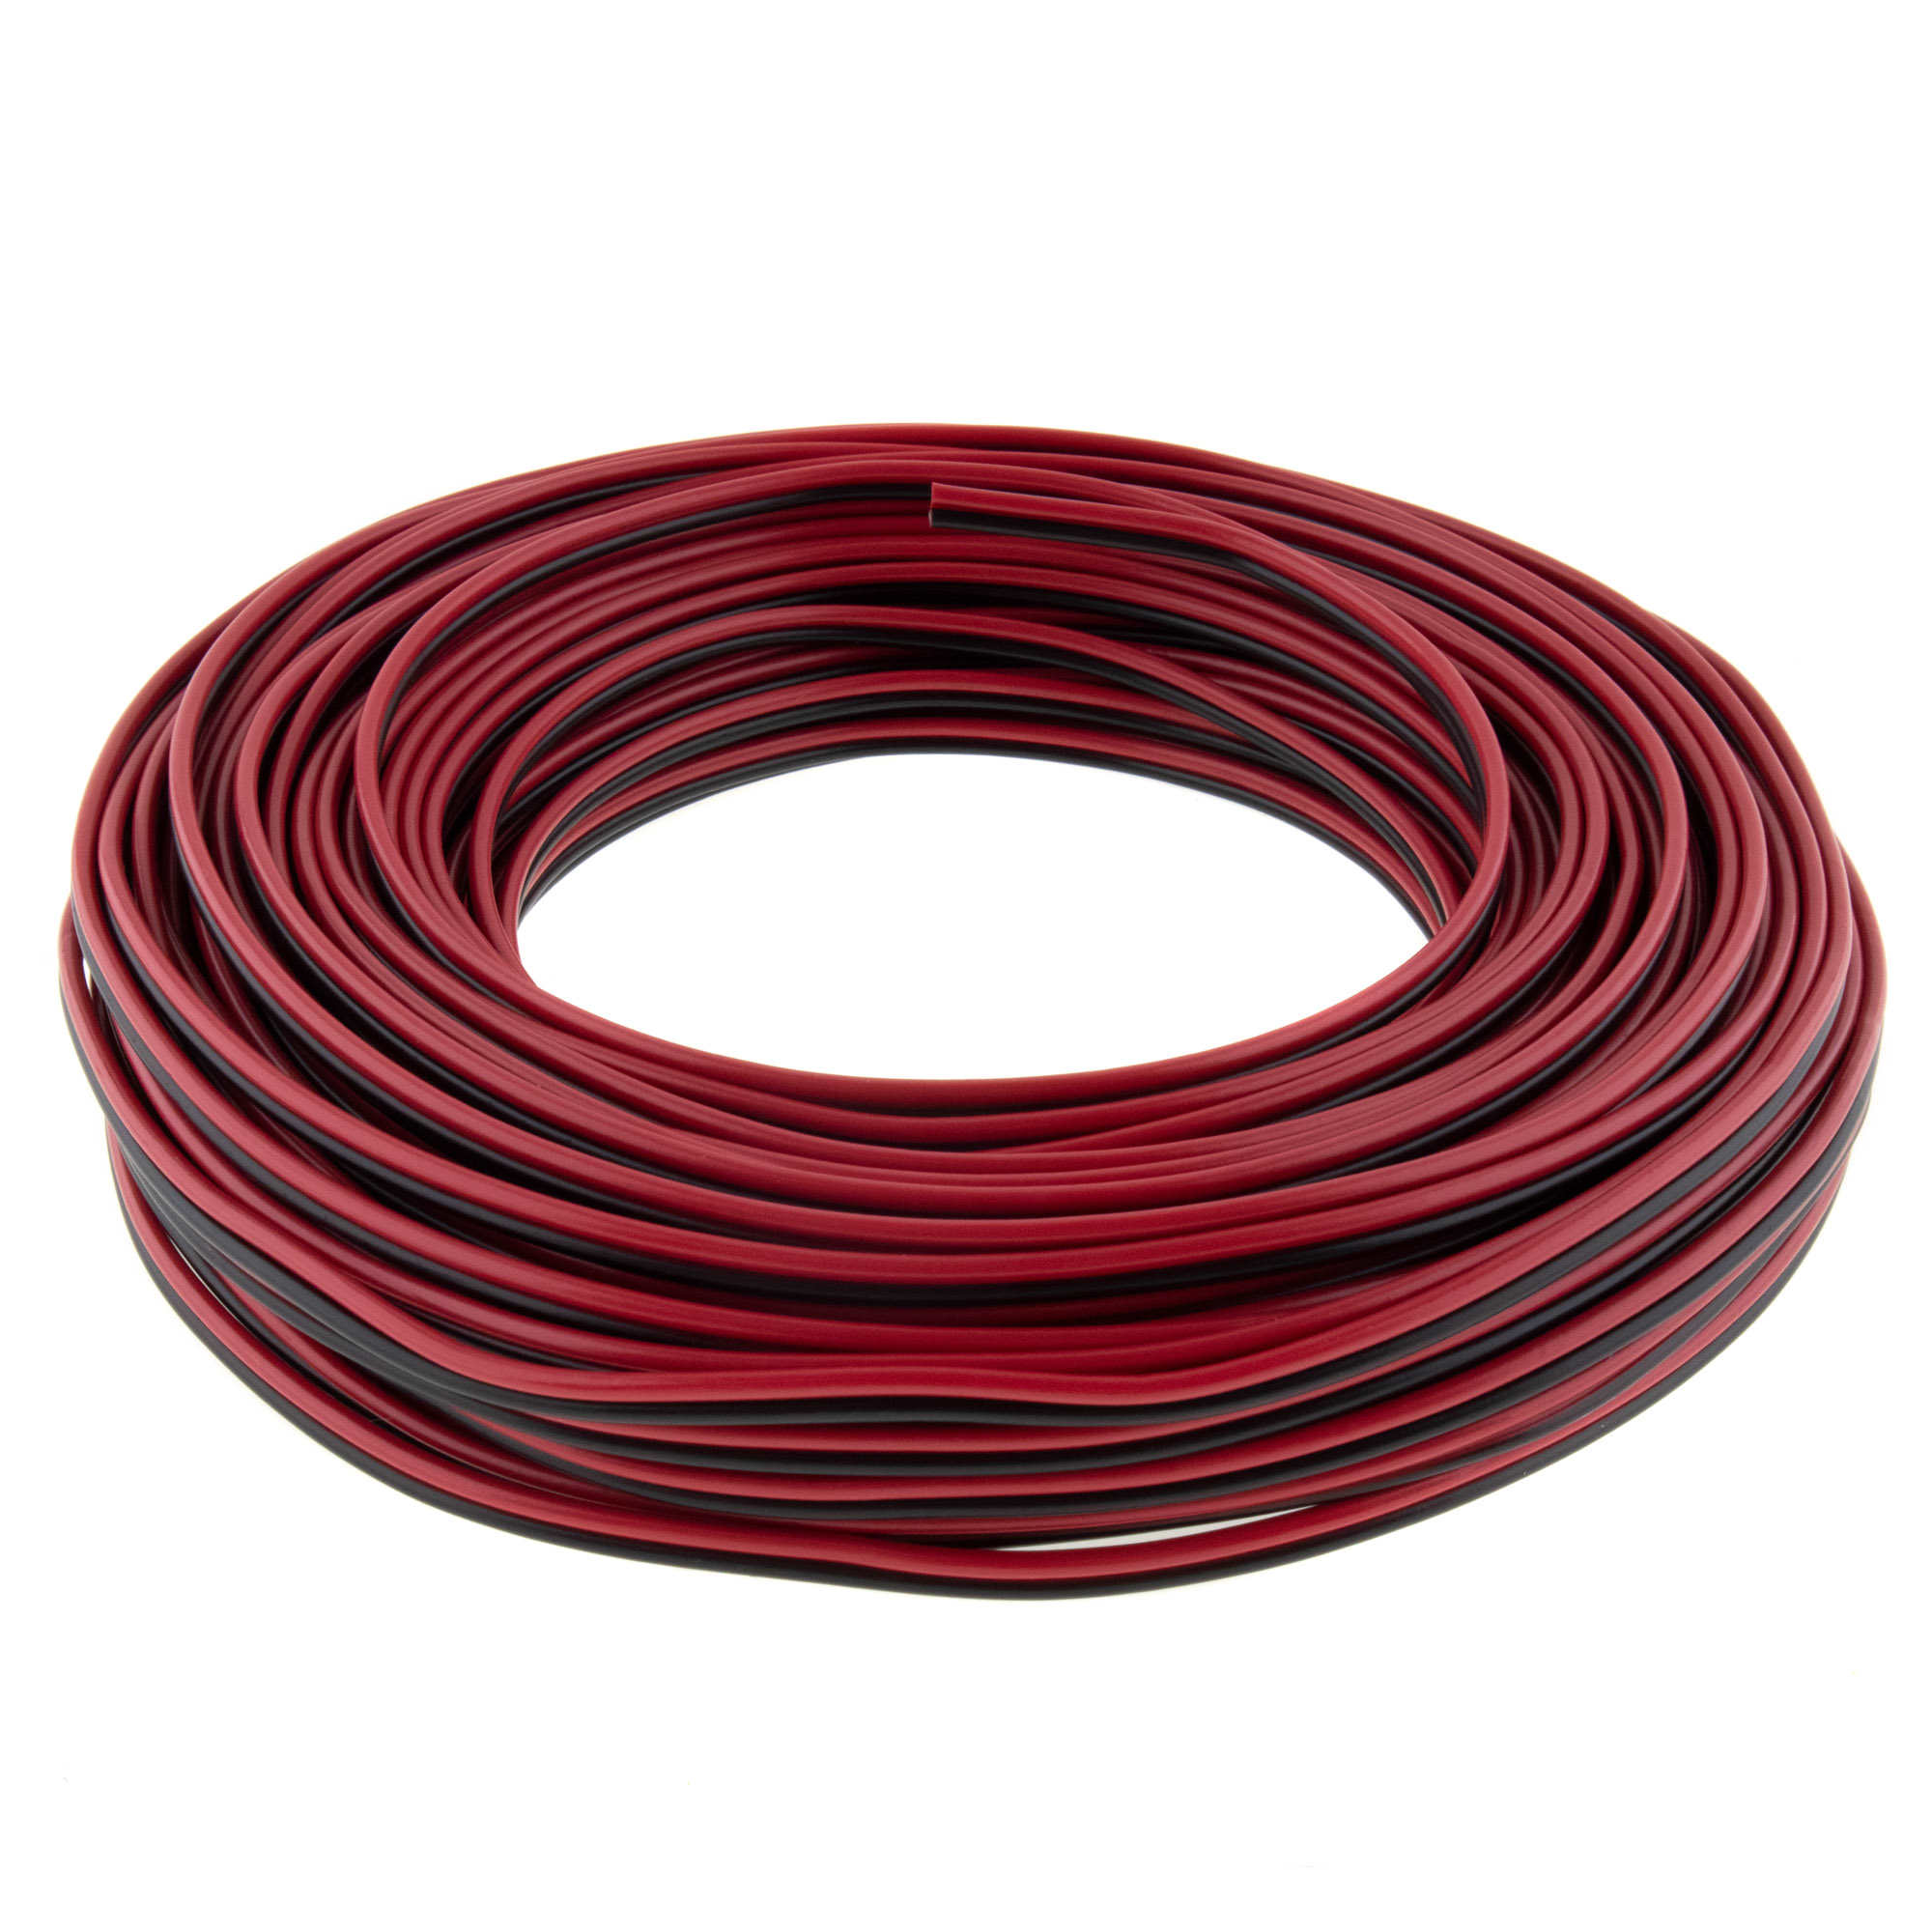 Loudspeaker cable red/black 25m 0.50mm